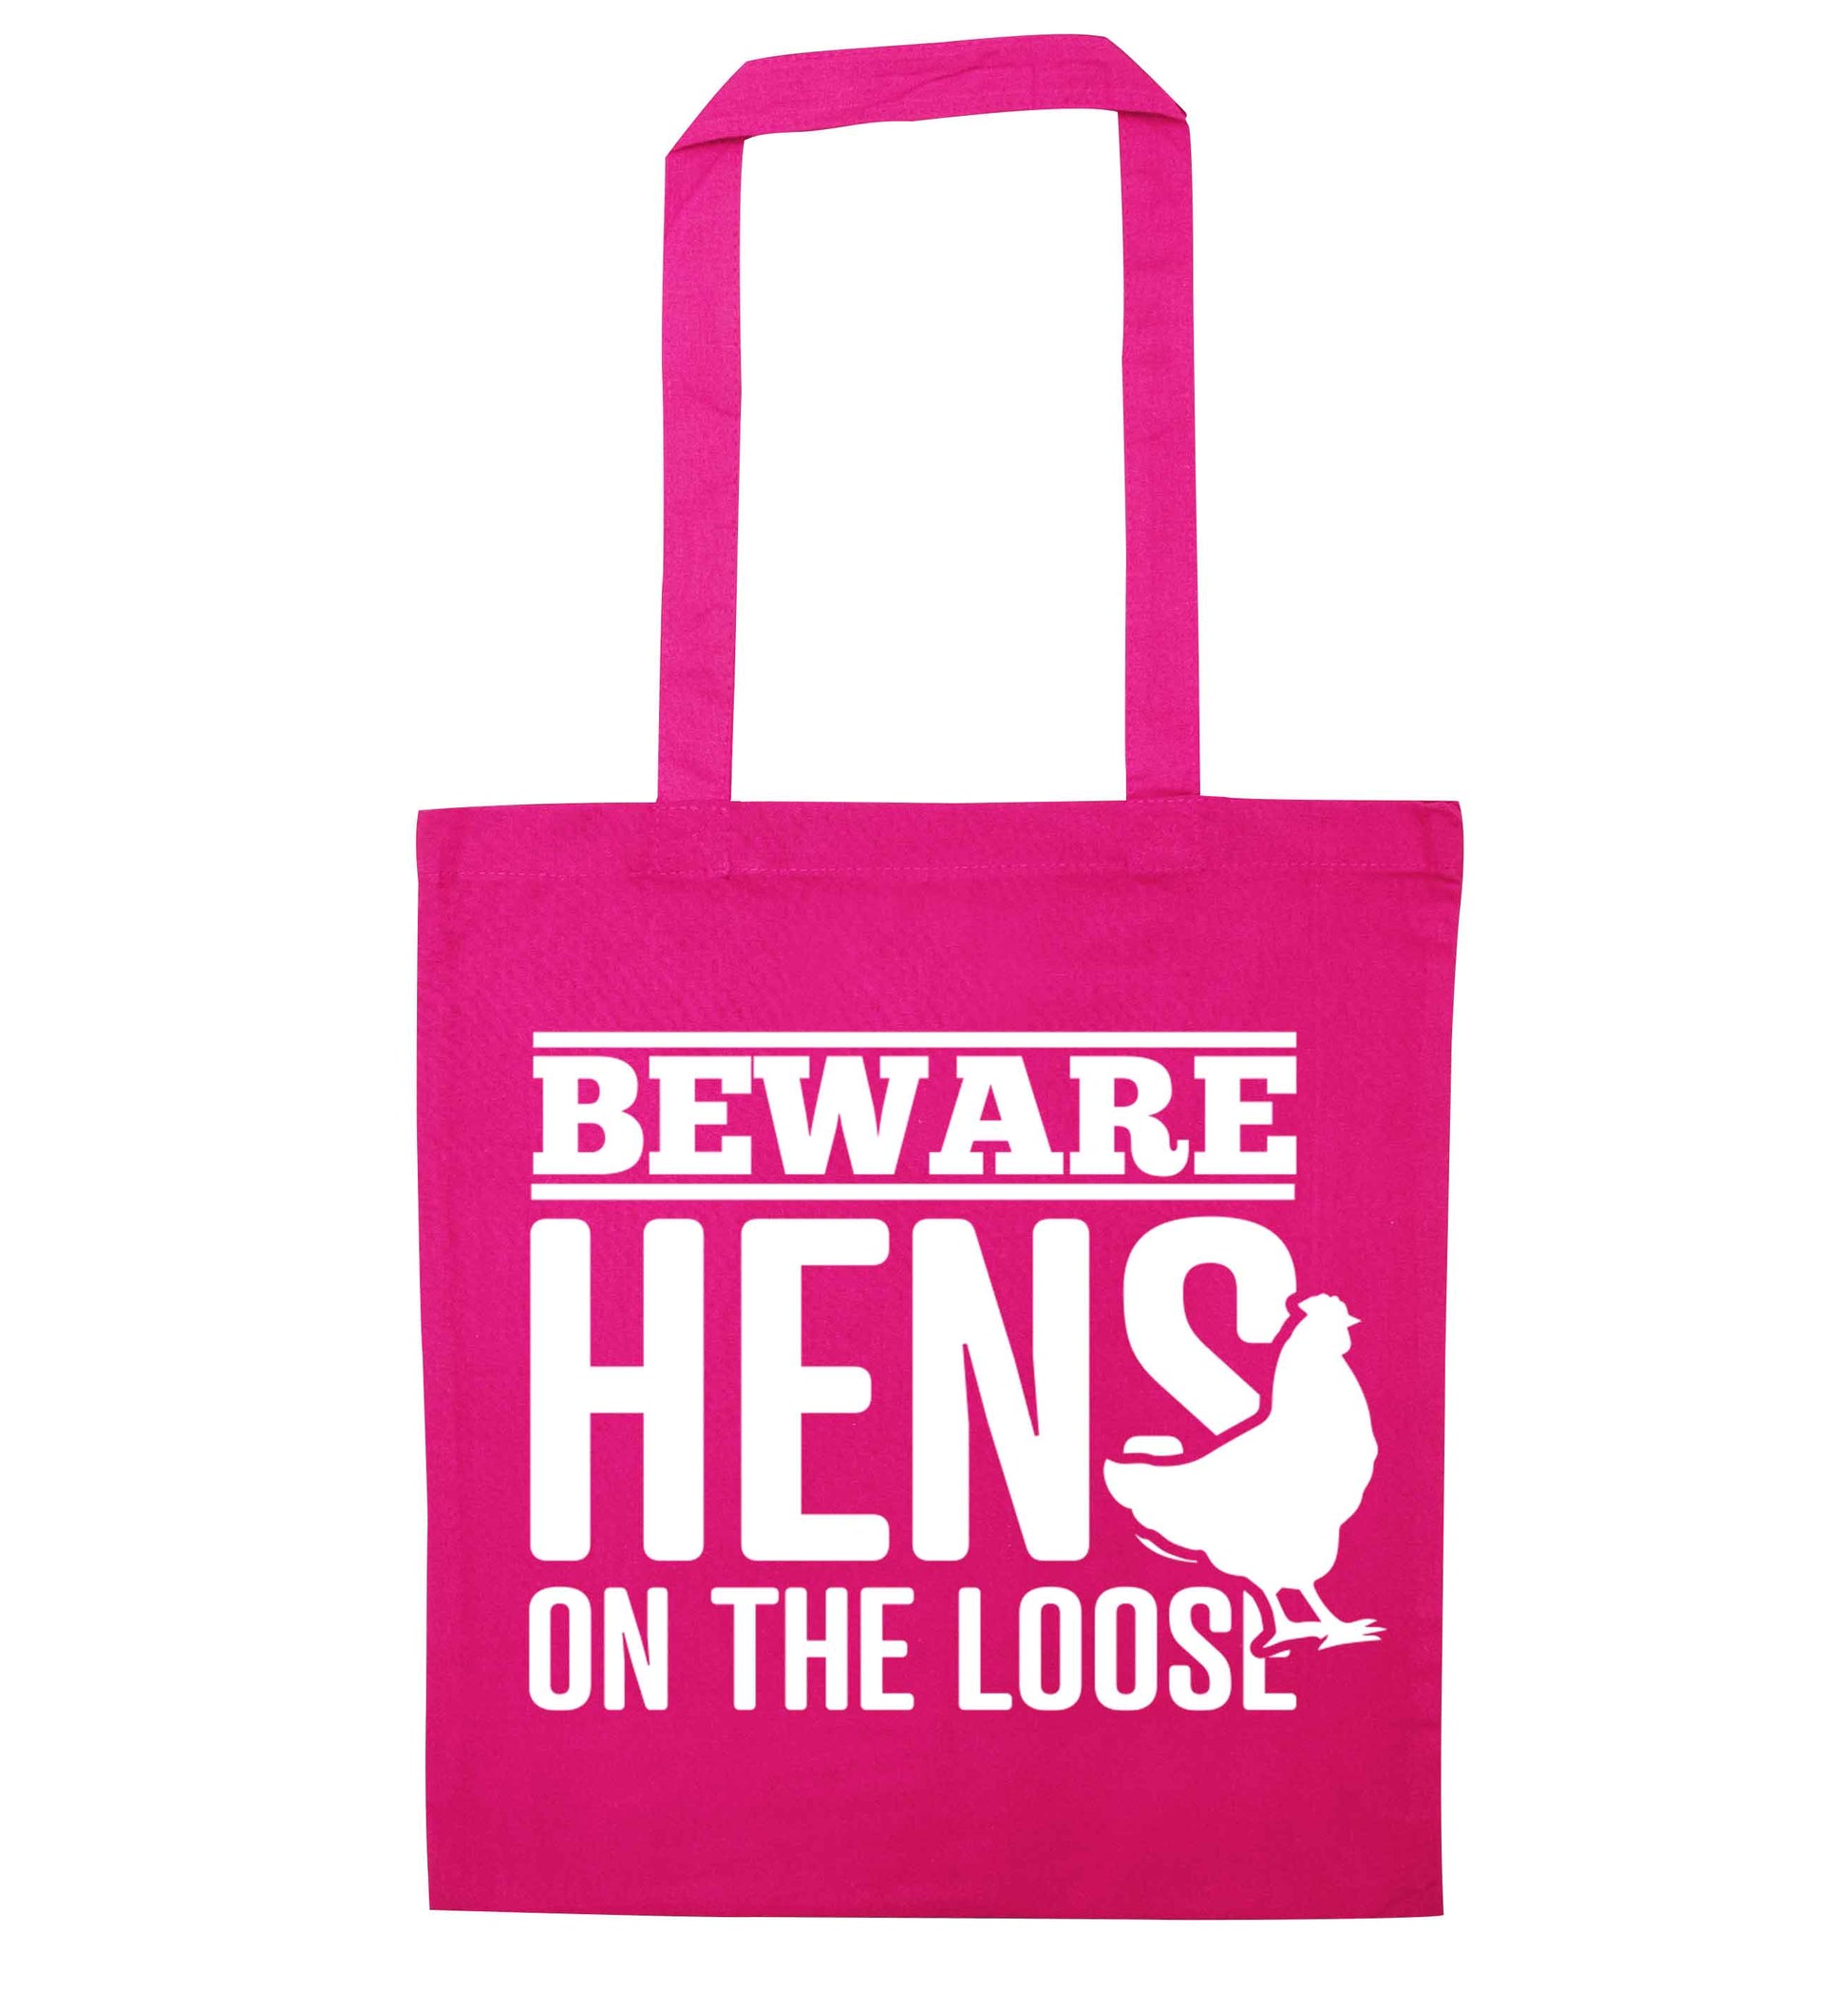 Beware hens on the loose pink tote bag